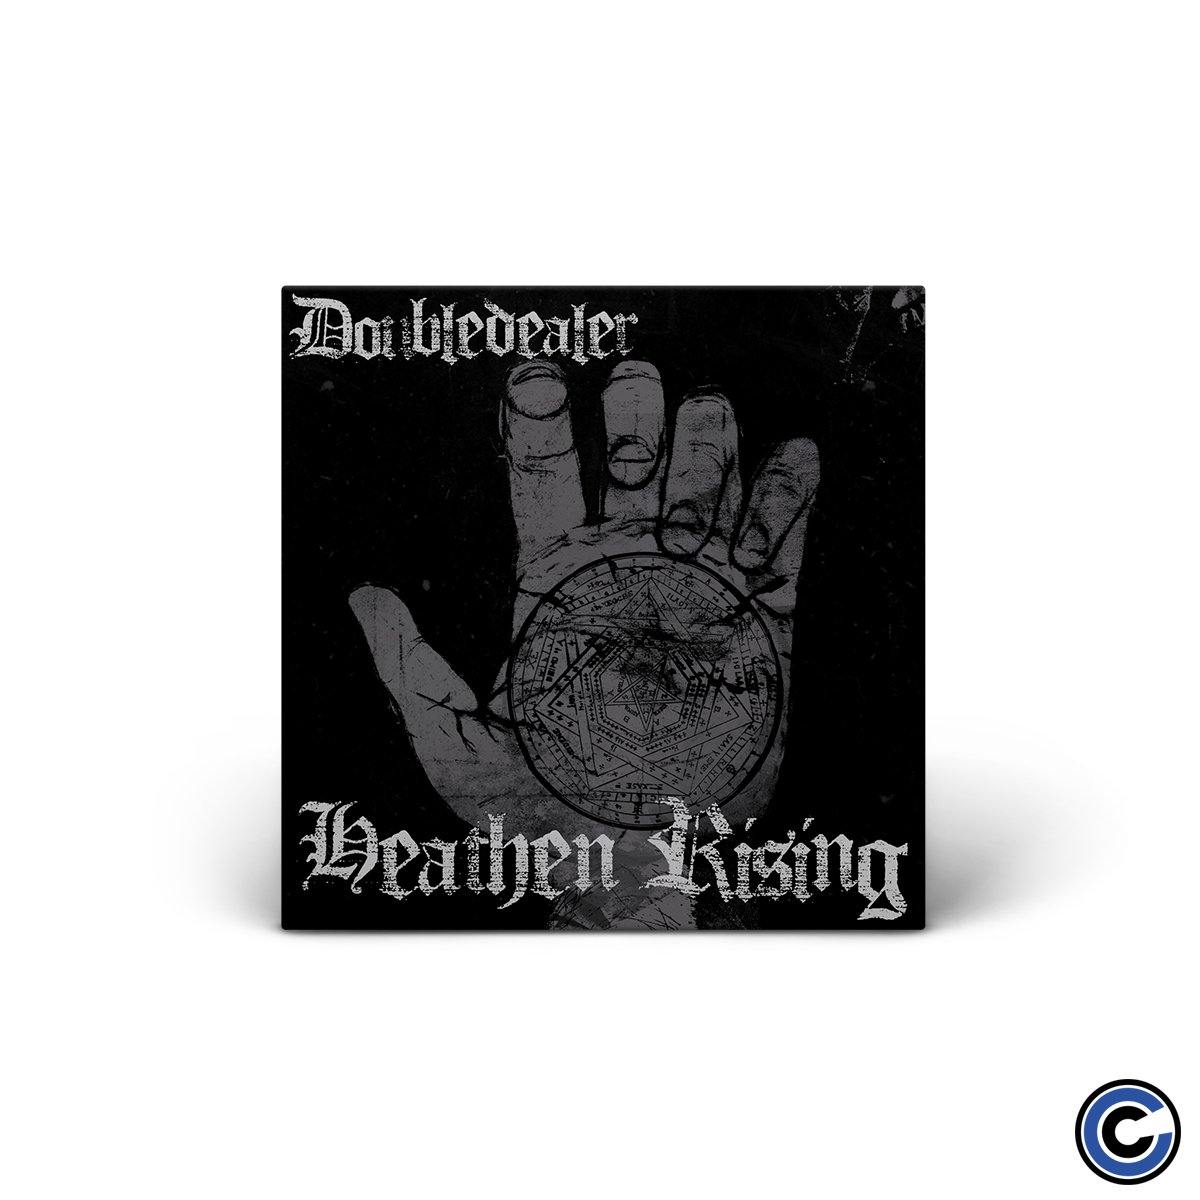 Buy – Doubledealer "Heathens Rising" 7" – Band & Music Merch – Cold Cuts Merch